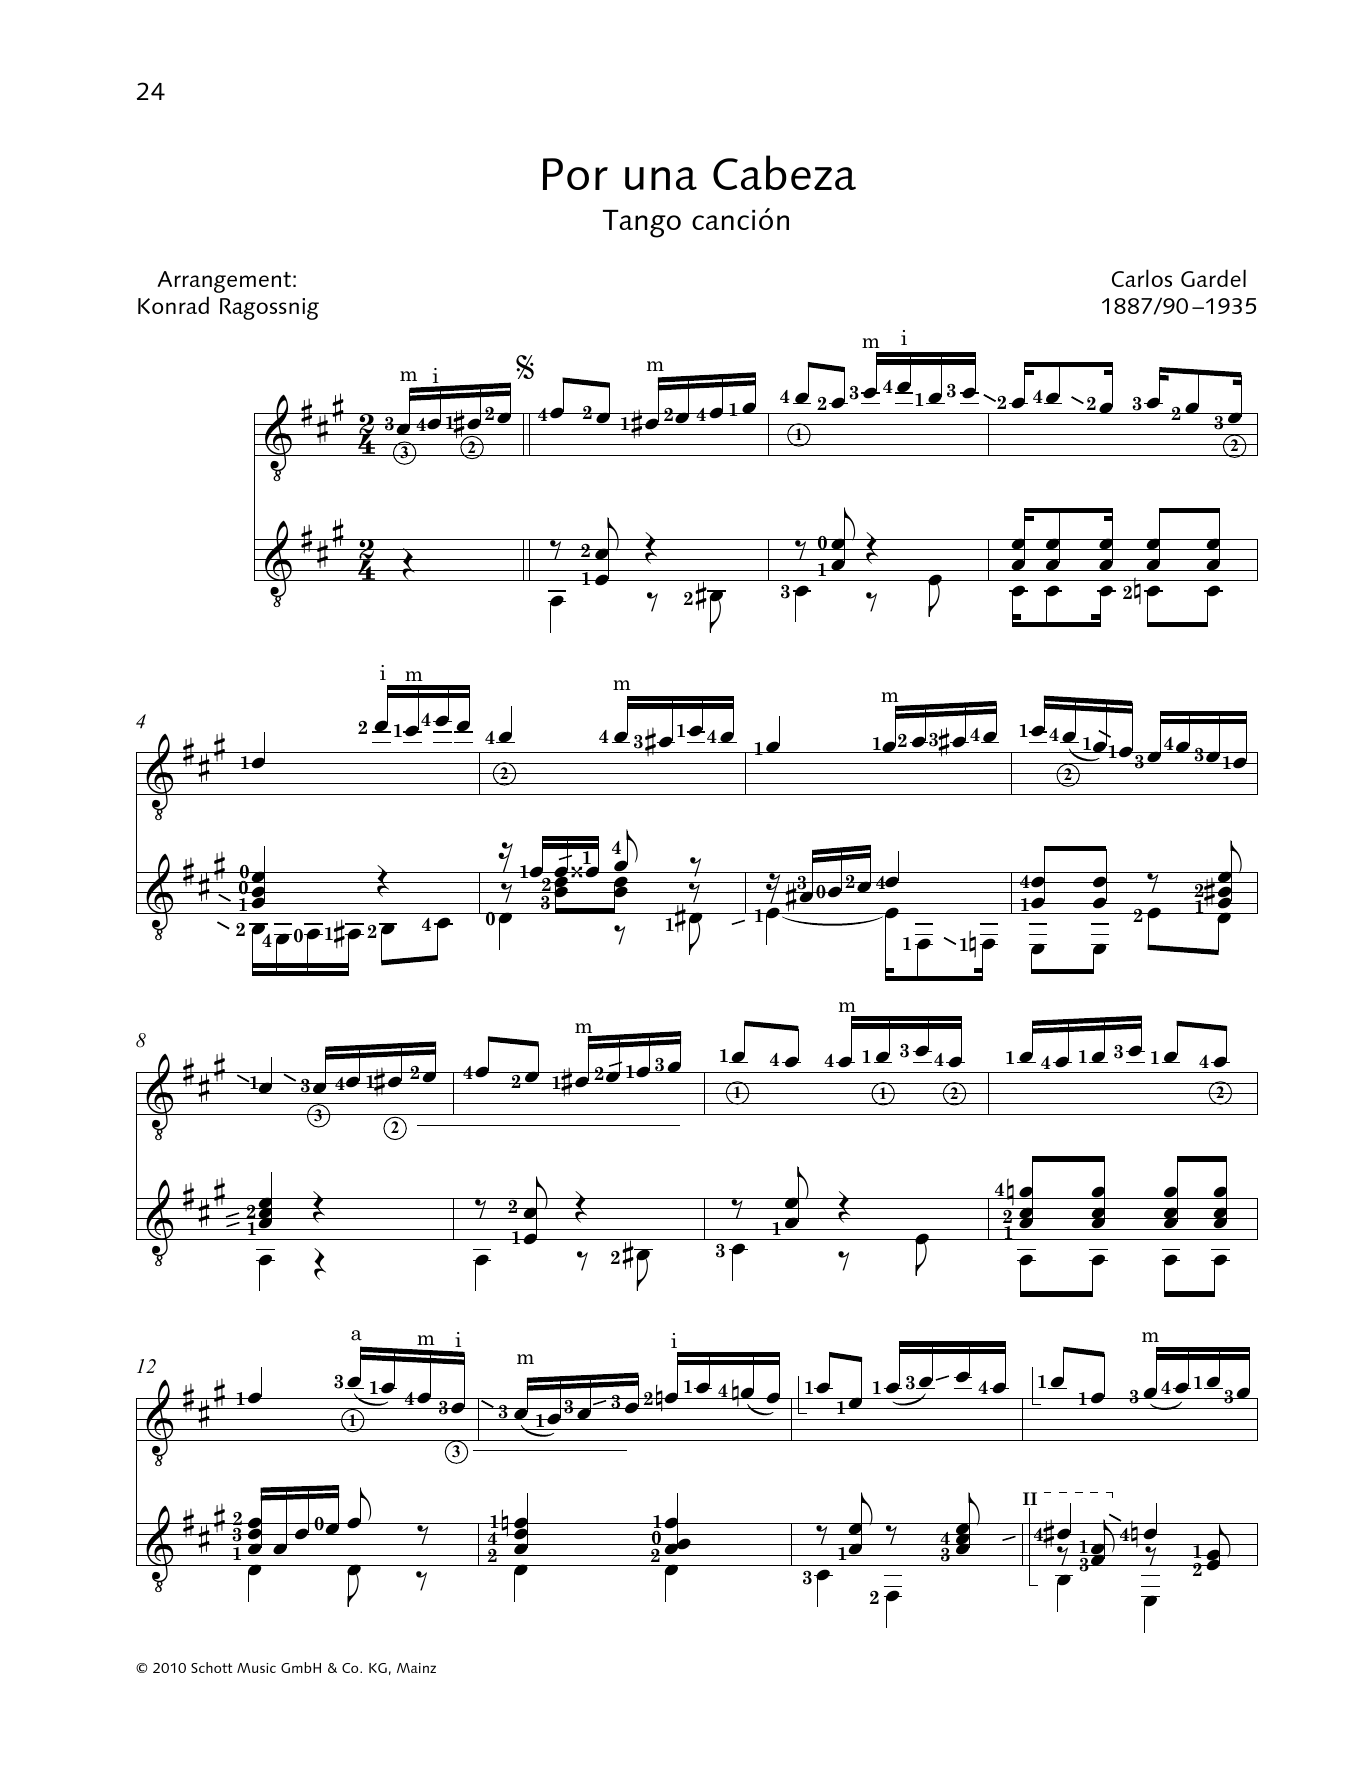 Carlos Gardel Por Una Cabeza - Full Score sheet music notes and chords arranged for Performance Ensemble